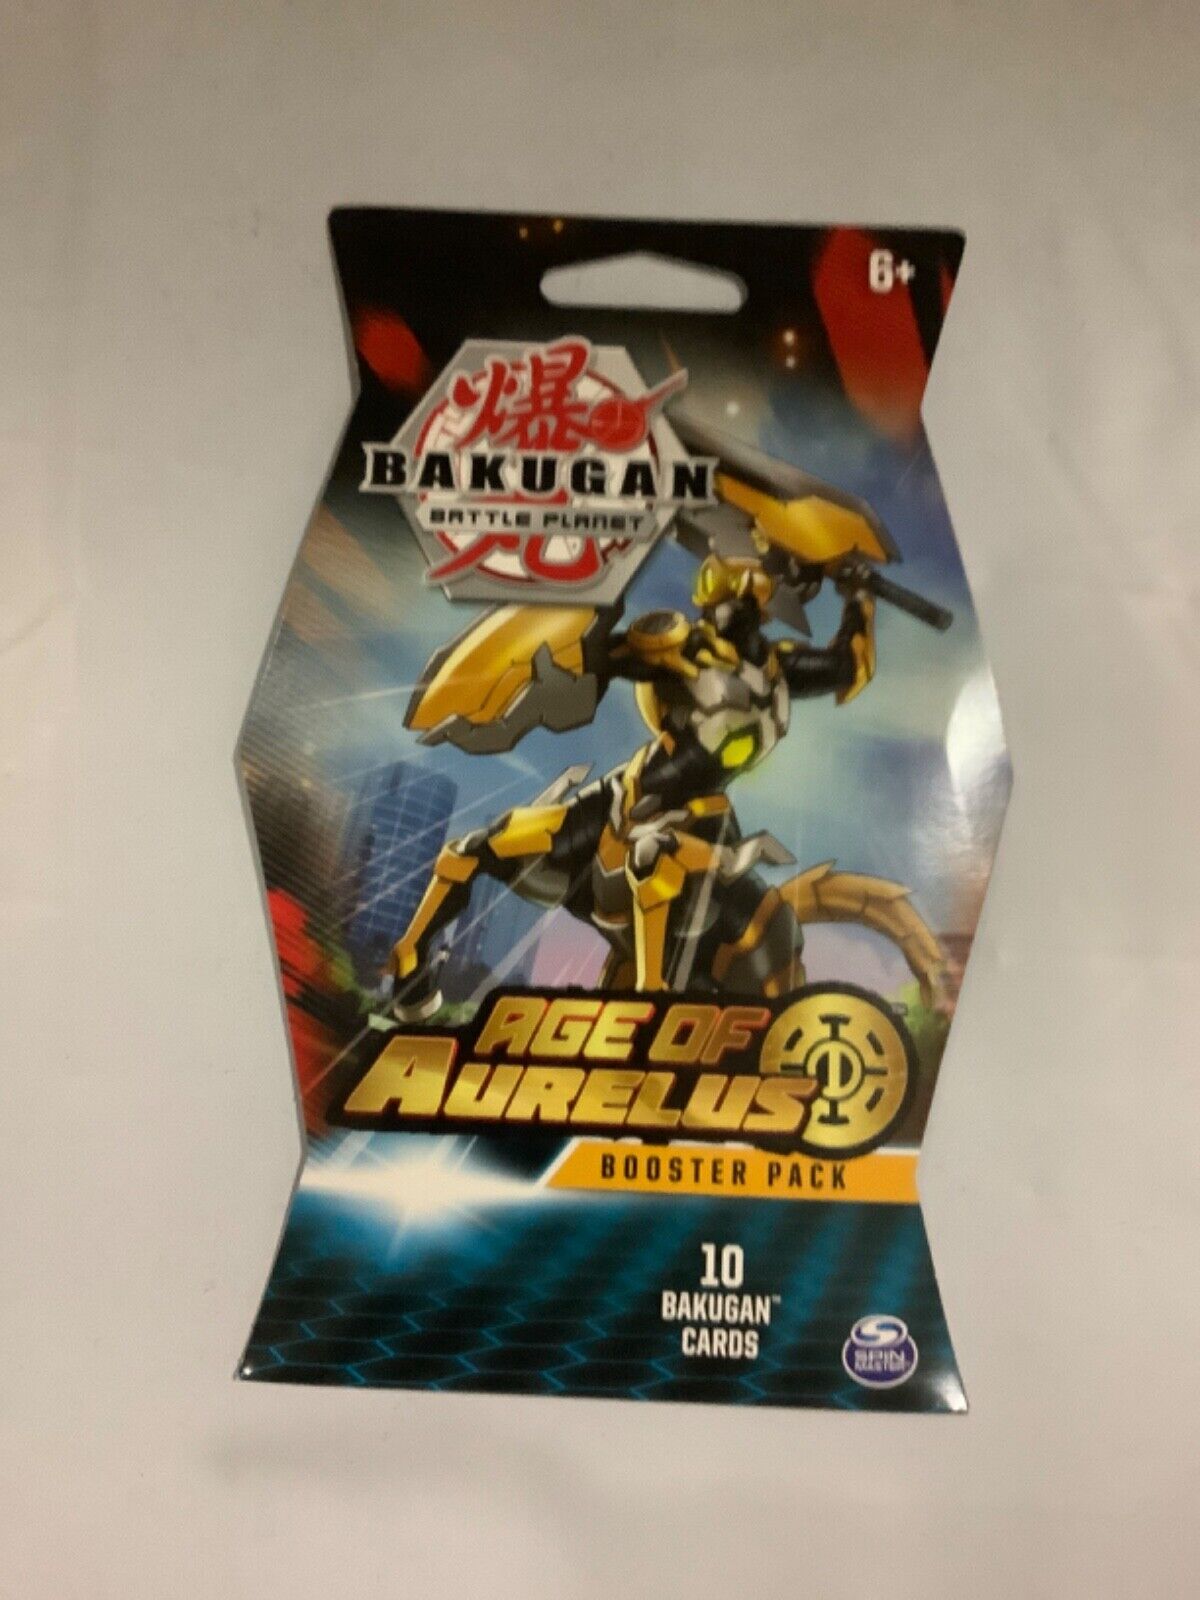 Bakugan Battle Planet, Age of Aurelus Booster Pack 10 cards